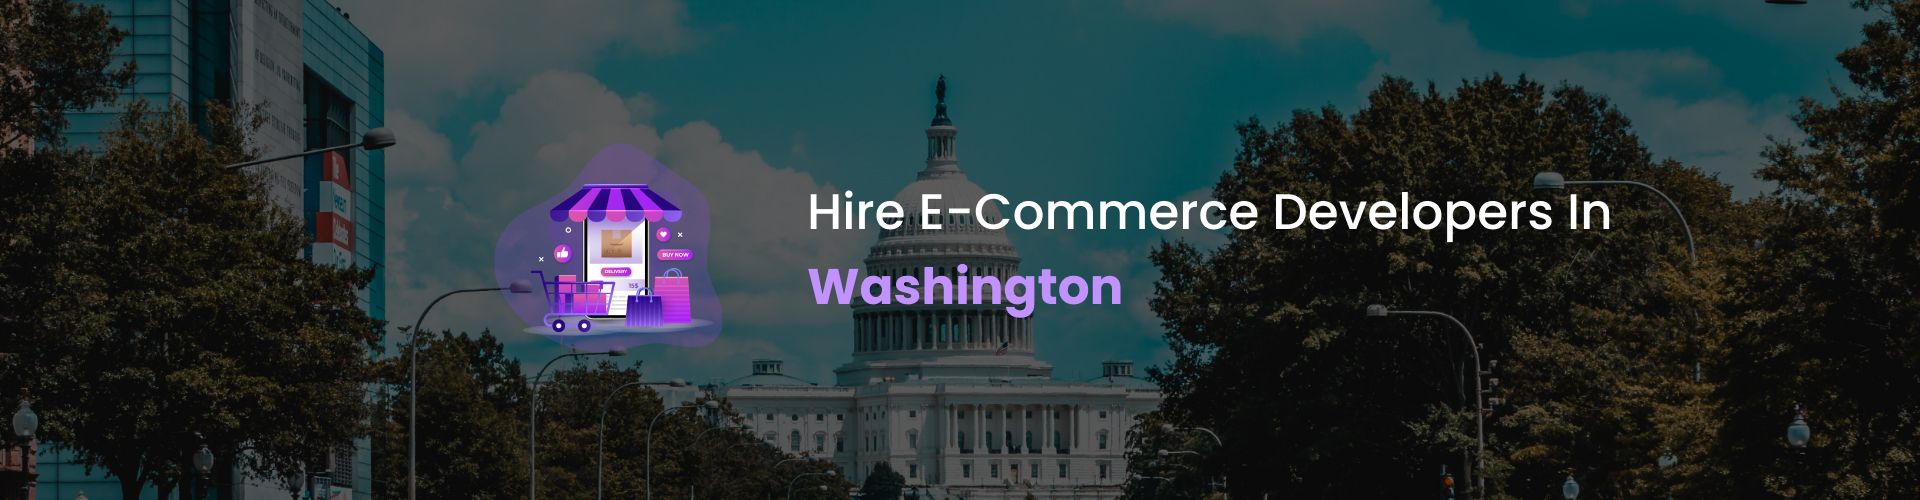 hire ecommerce developers in washington